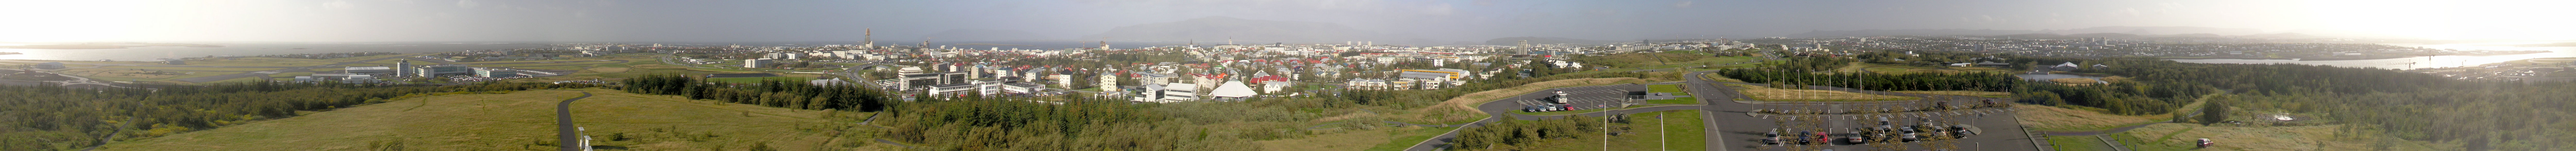 Rykjavik panorama from Perlan